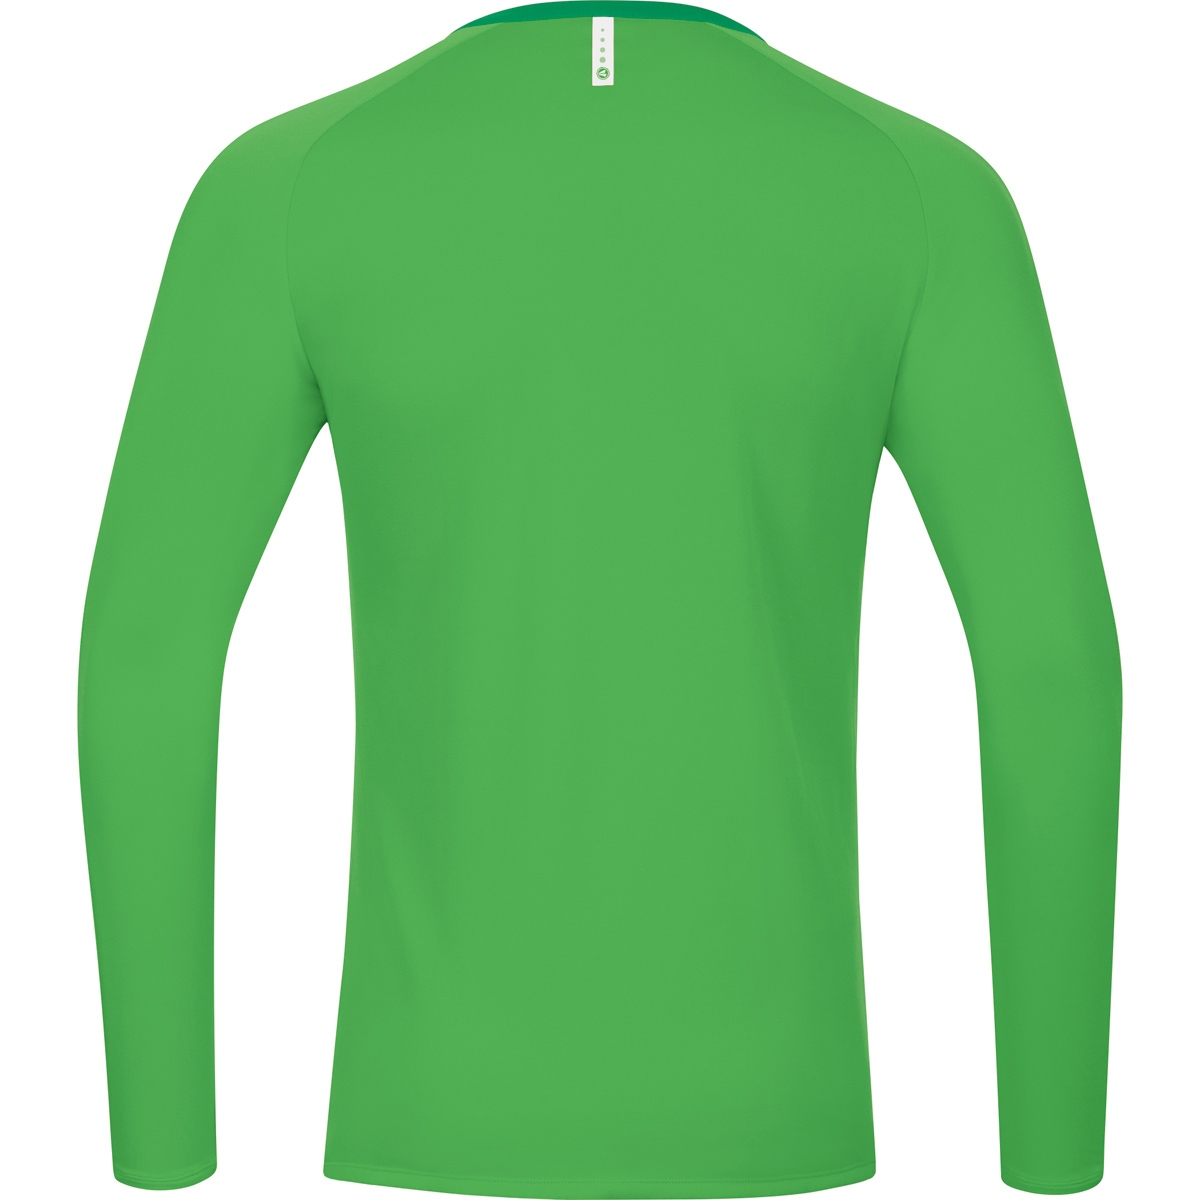 JAKO Sweat green/sportgrün, Gr. 2.0 L, soft Erwachsene, 8820 Champ